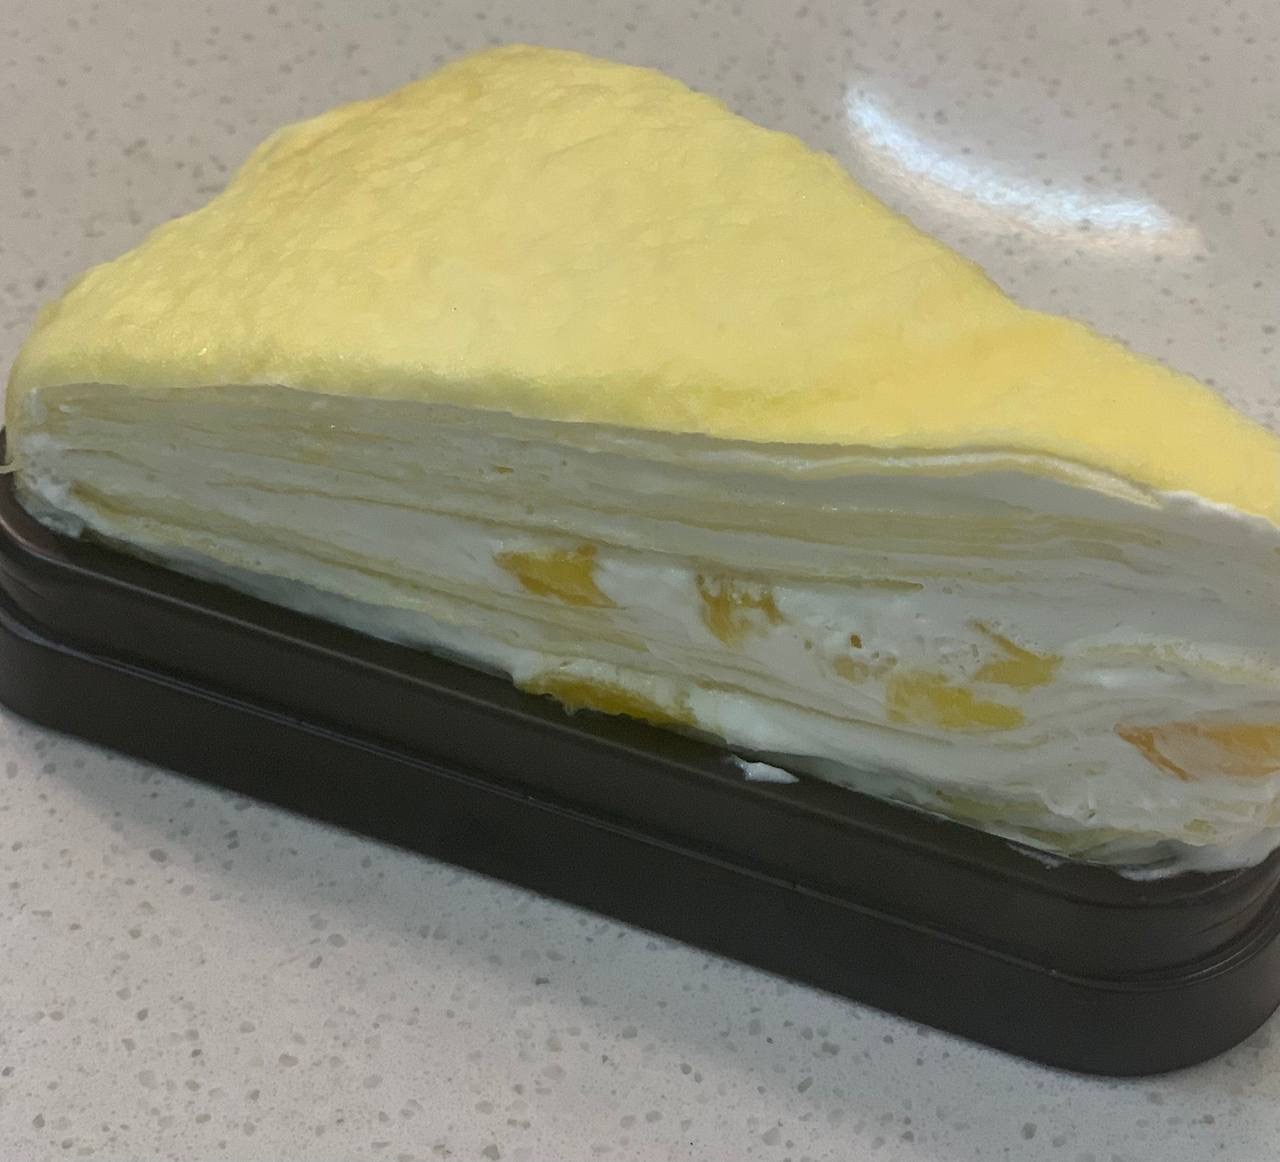 52.Durian Melaleuca Cake